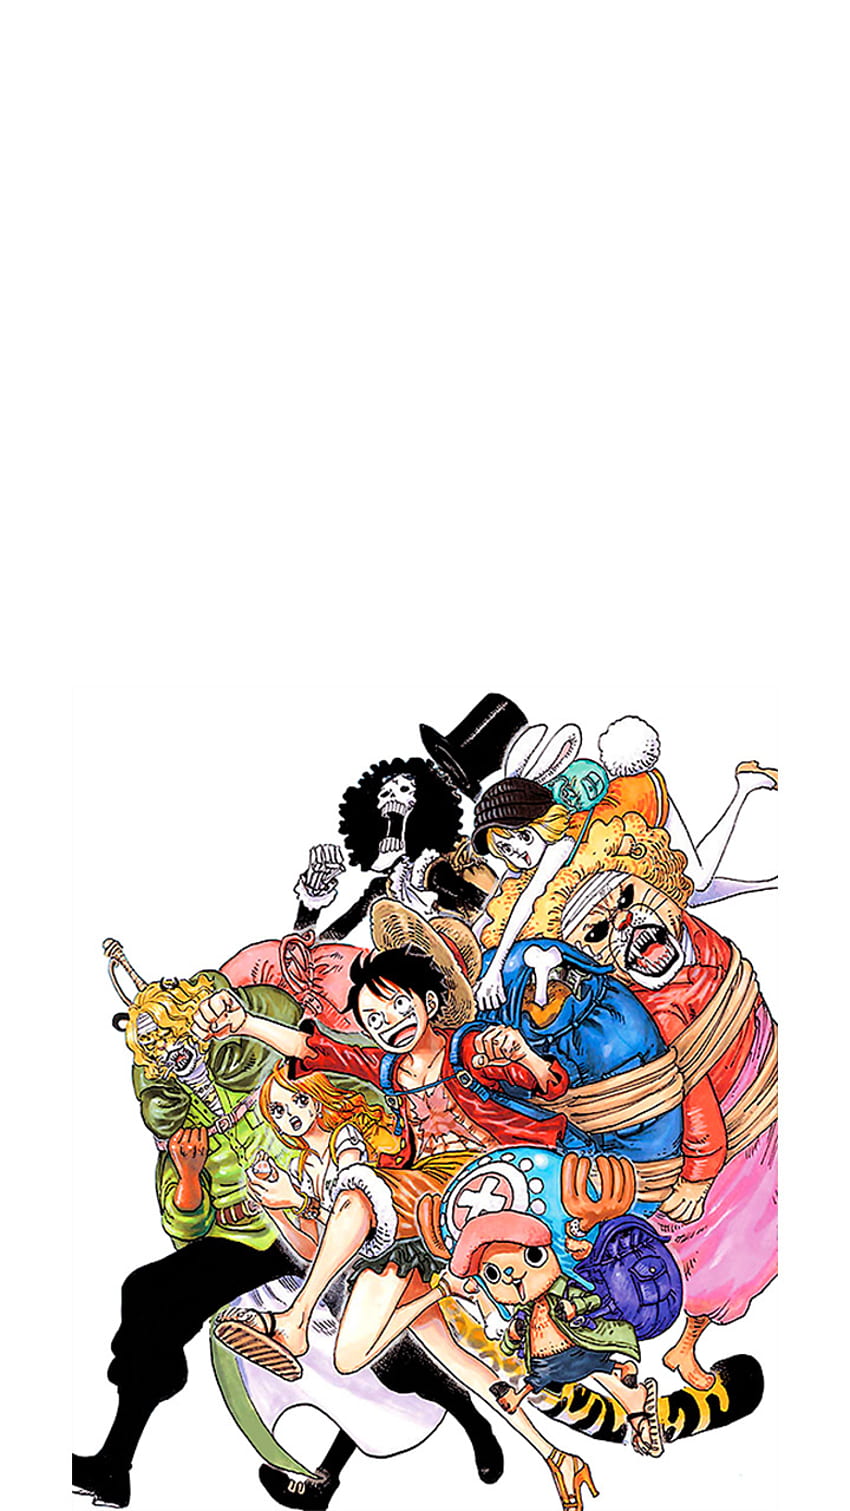 3840x2160px, 4K Free download | Luffy, Carrot, Anime, Pedro, Nami ...